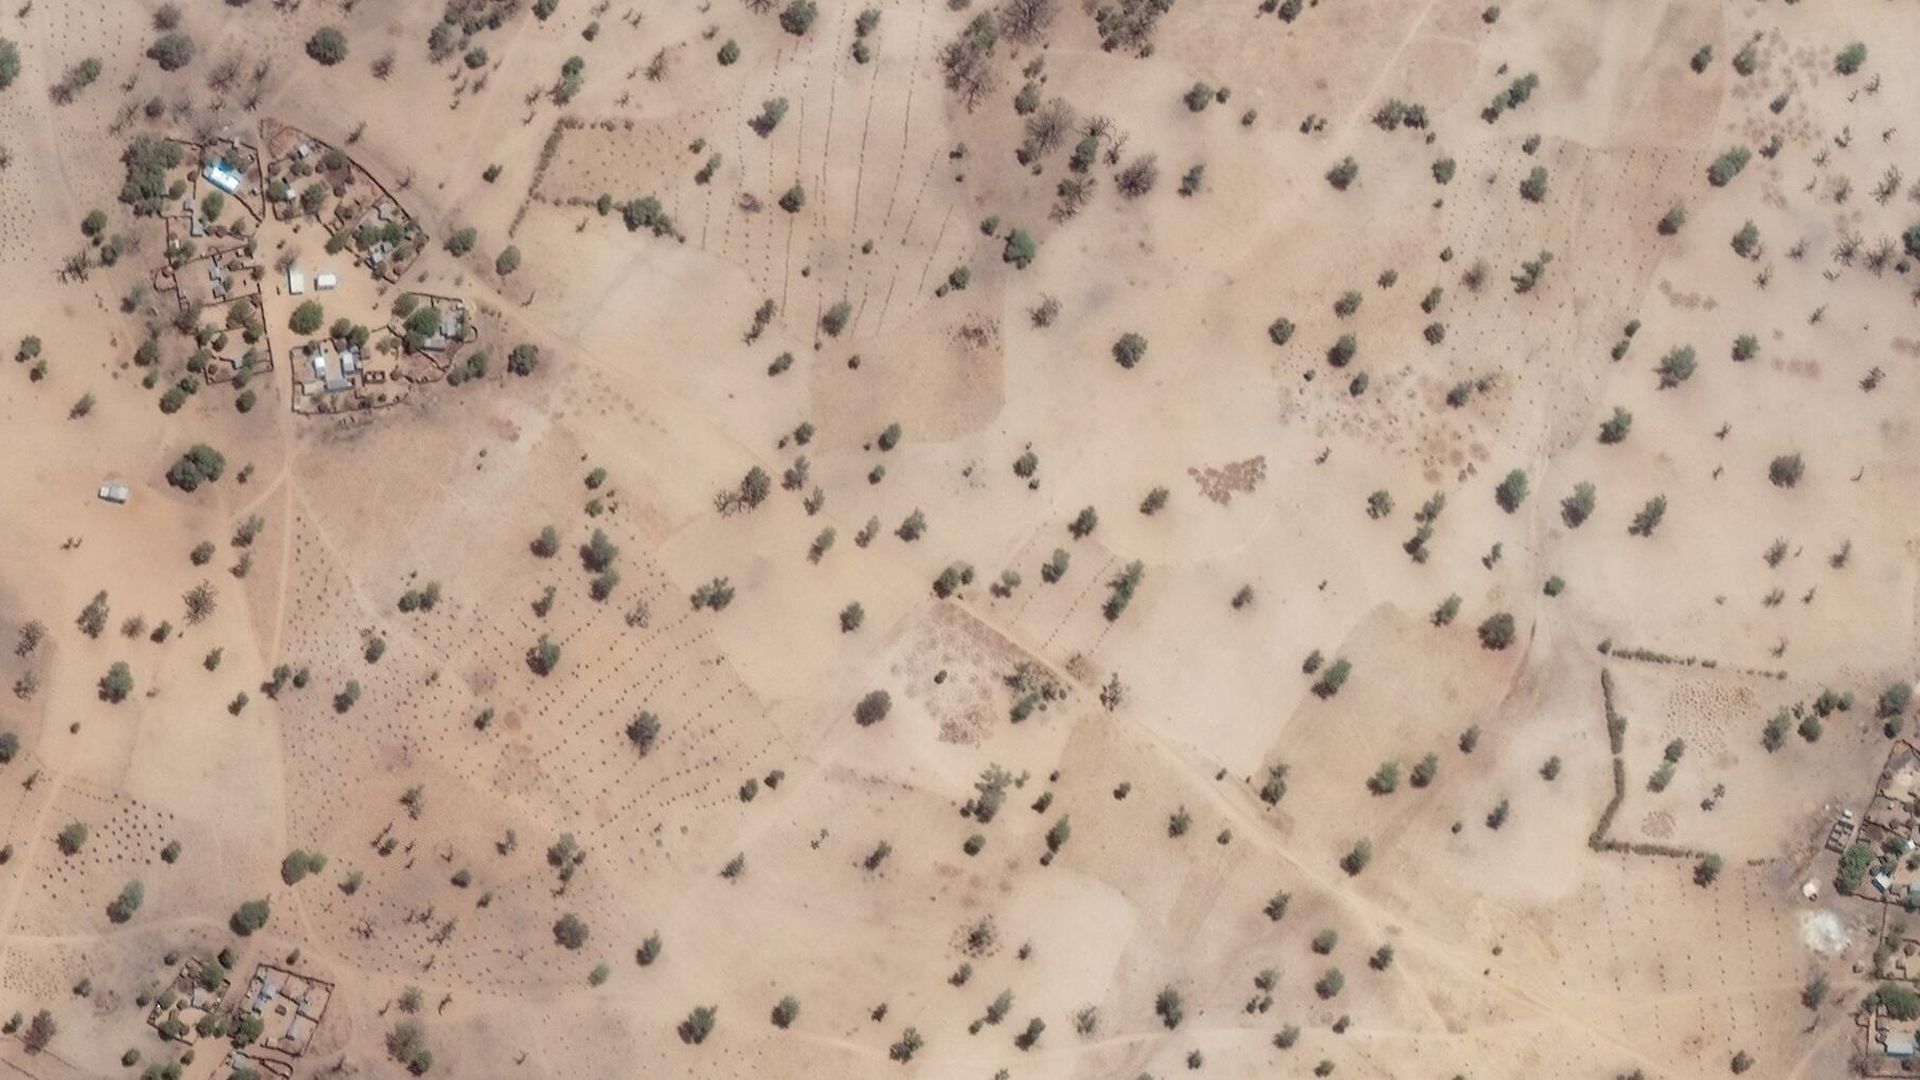 Satellite image of trees and farmland in Senegal